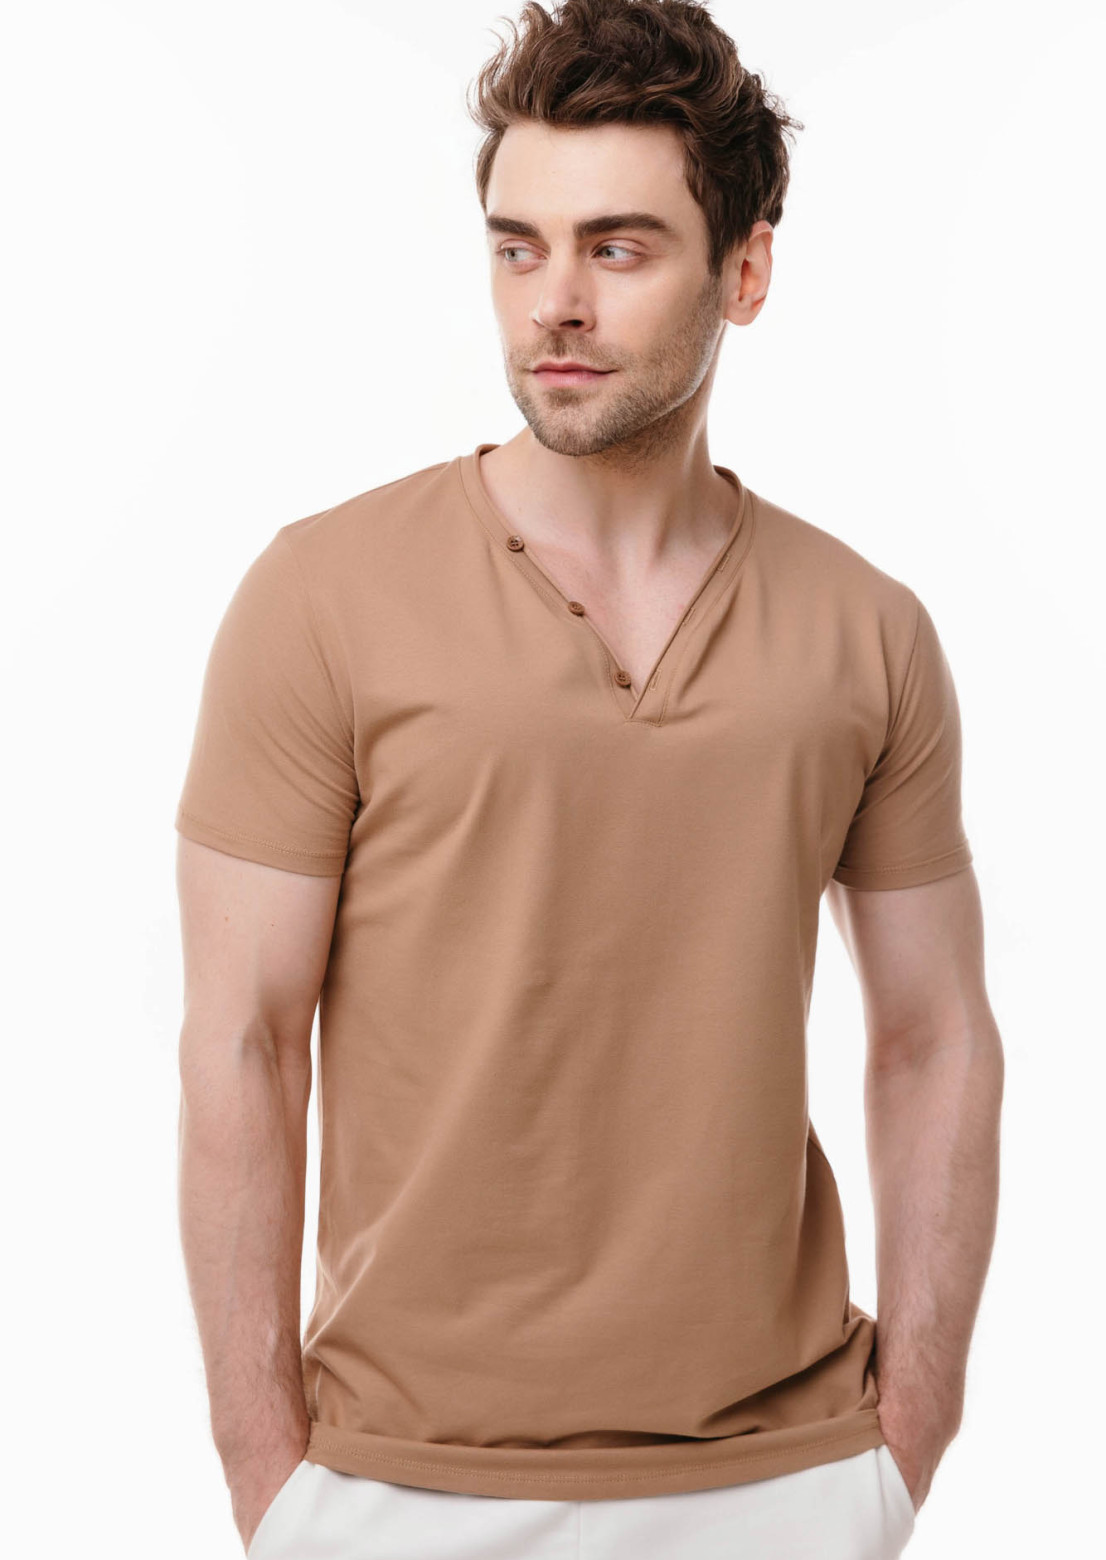 Beige button-down men's T-shirt